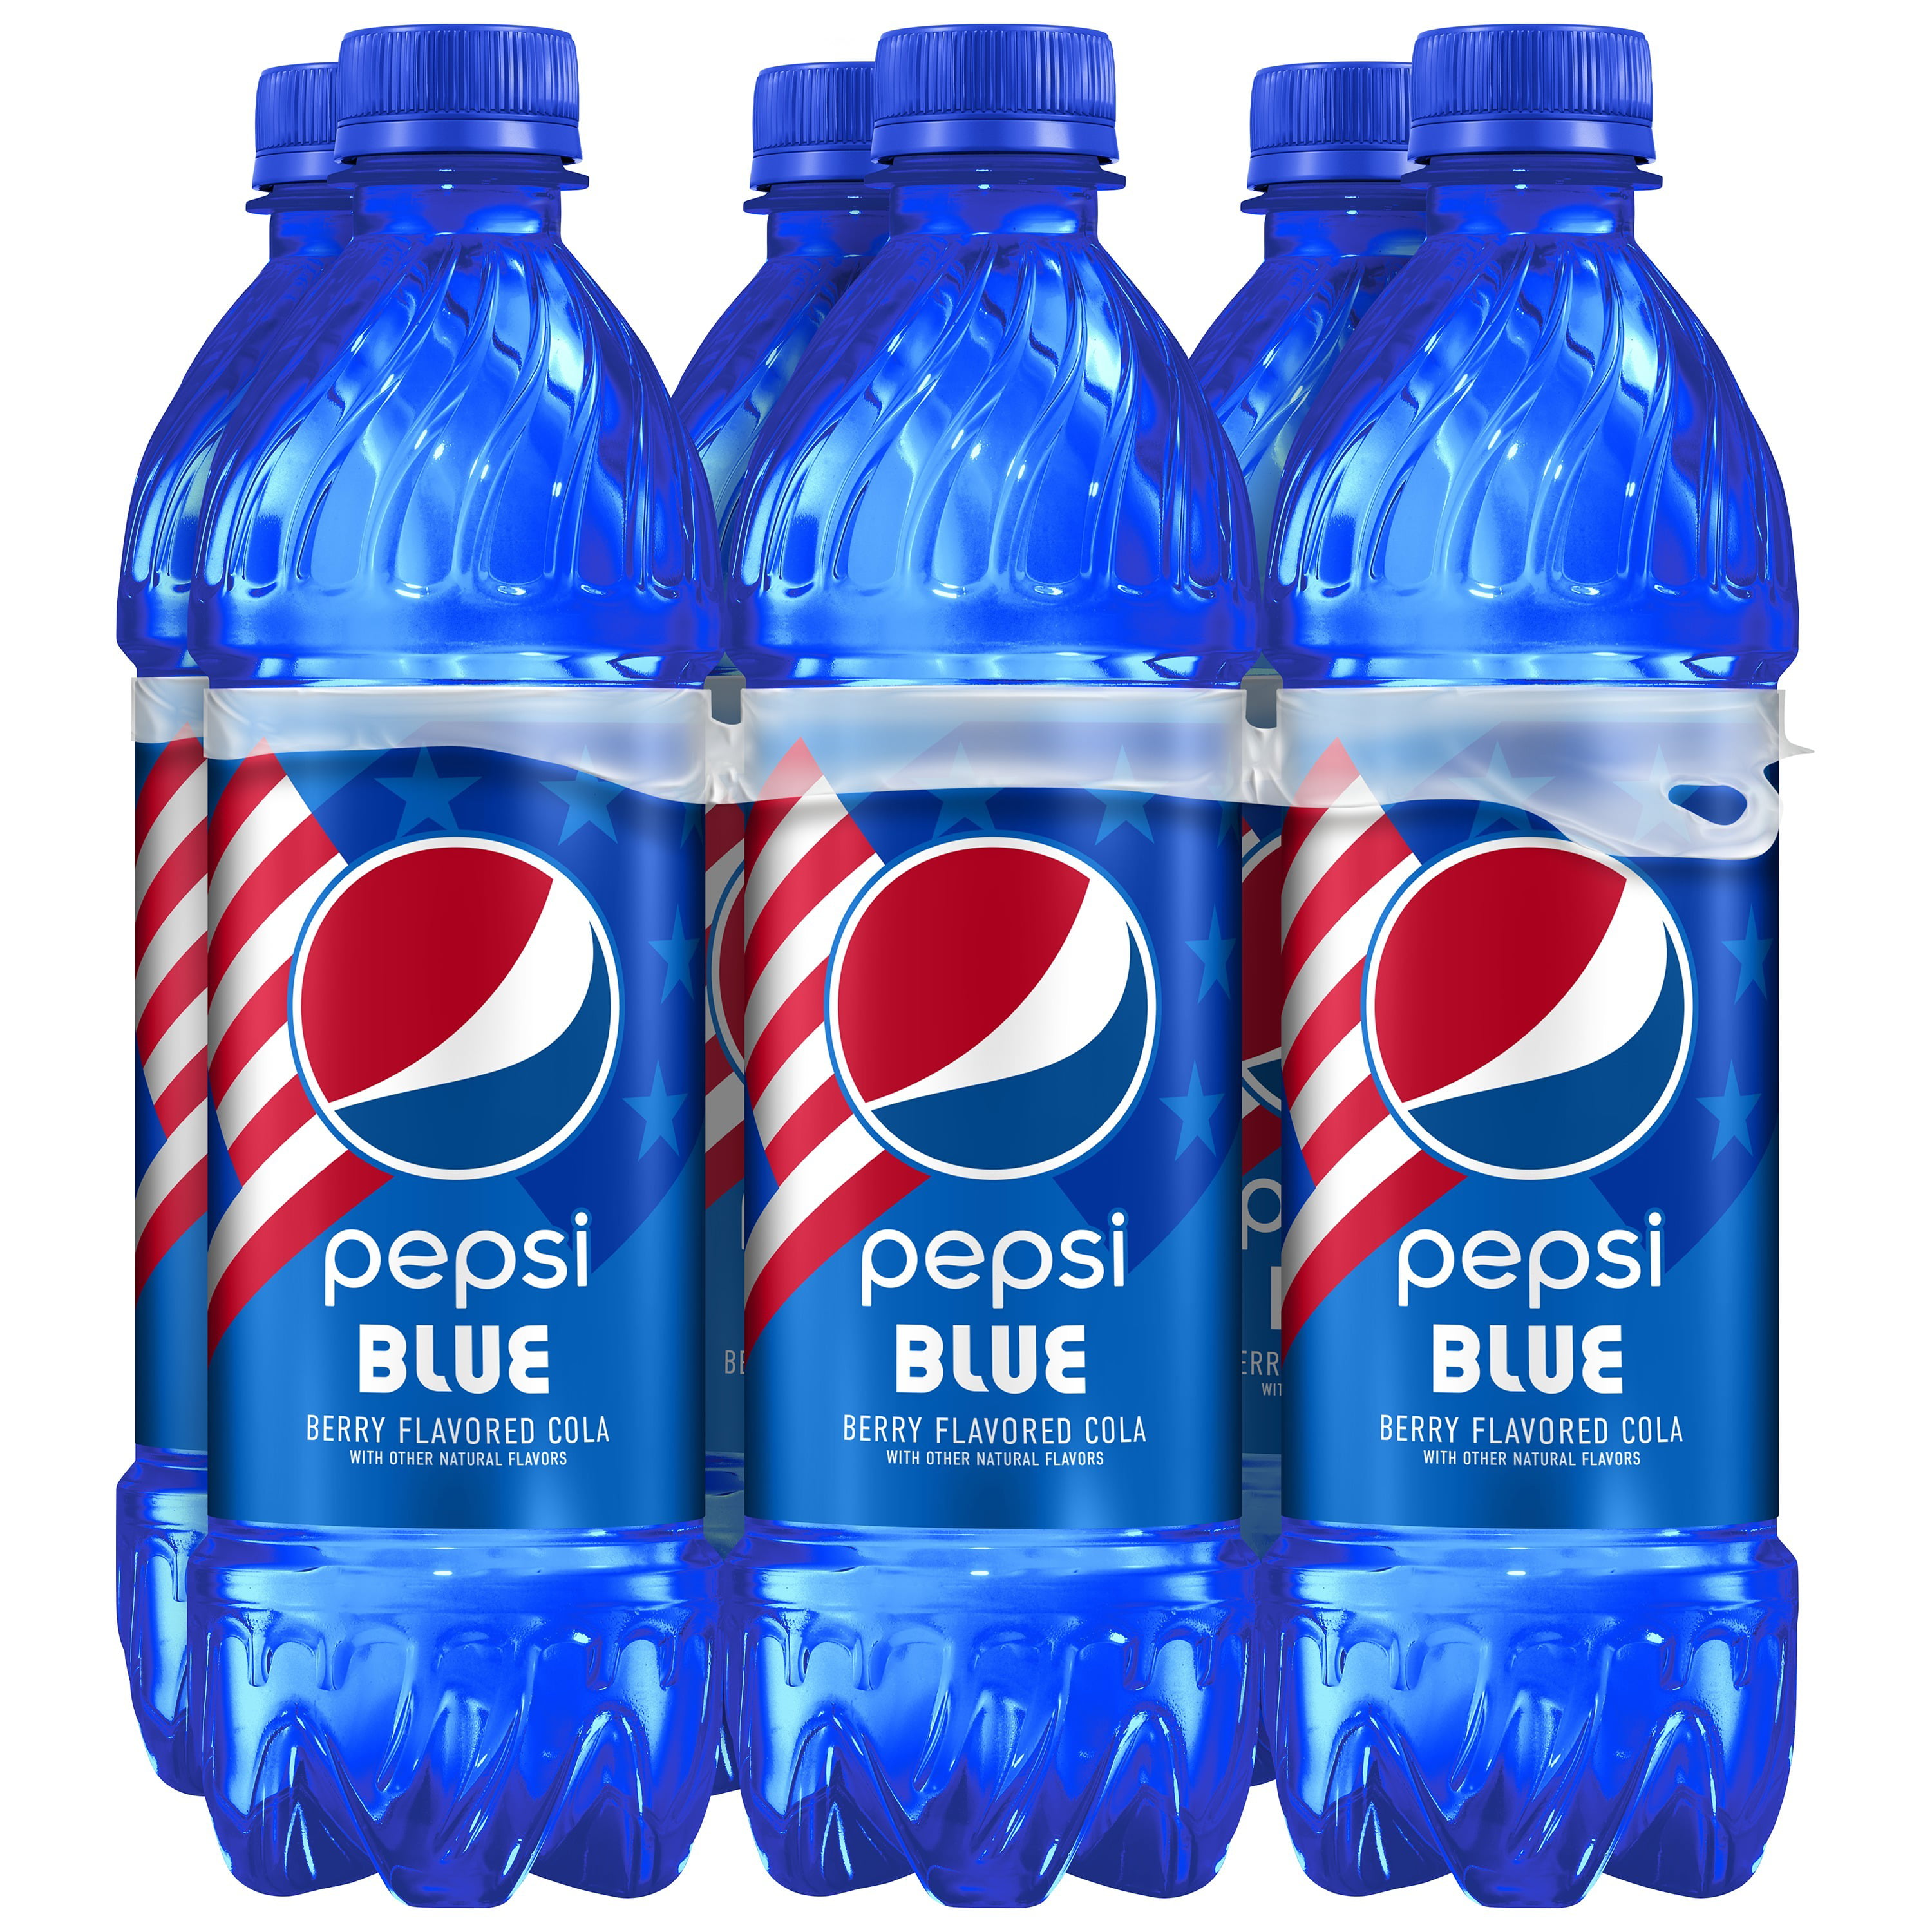 (6 Bottles) Pepsi Blue Berry Flavored Cola, 16.9 fl oz Bottle - Walmart